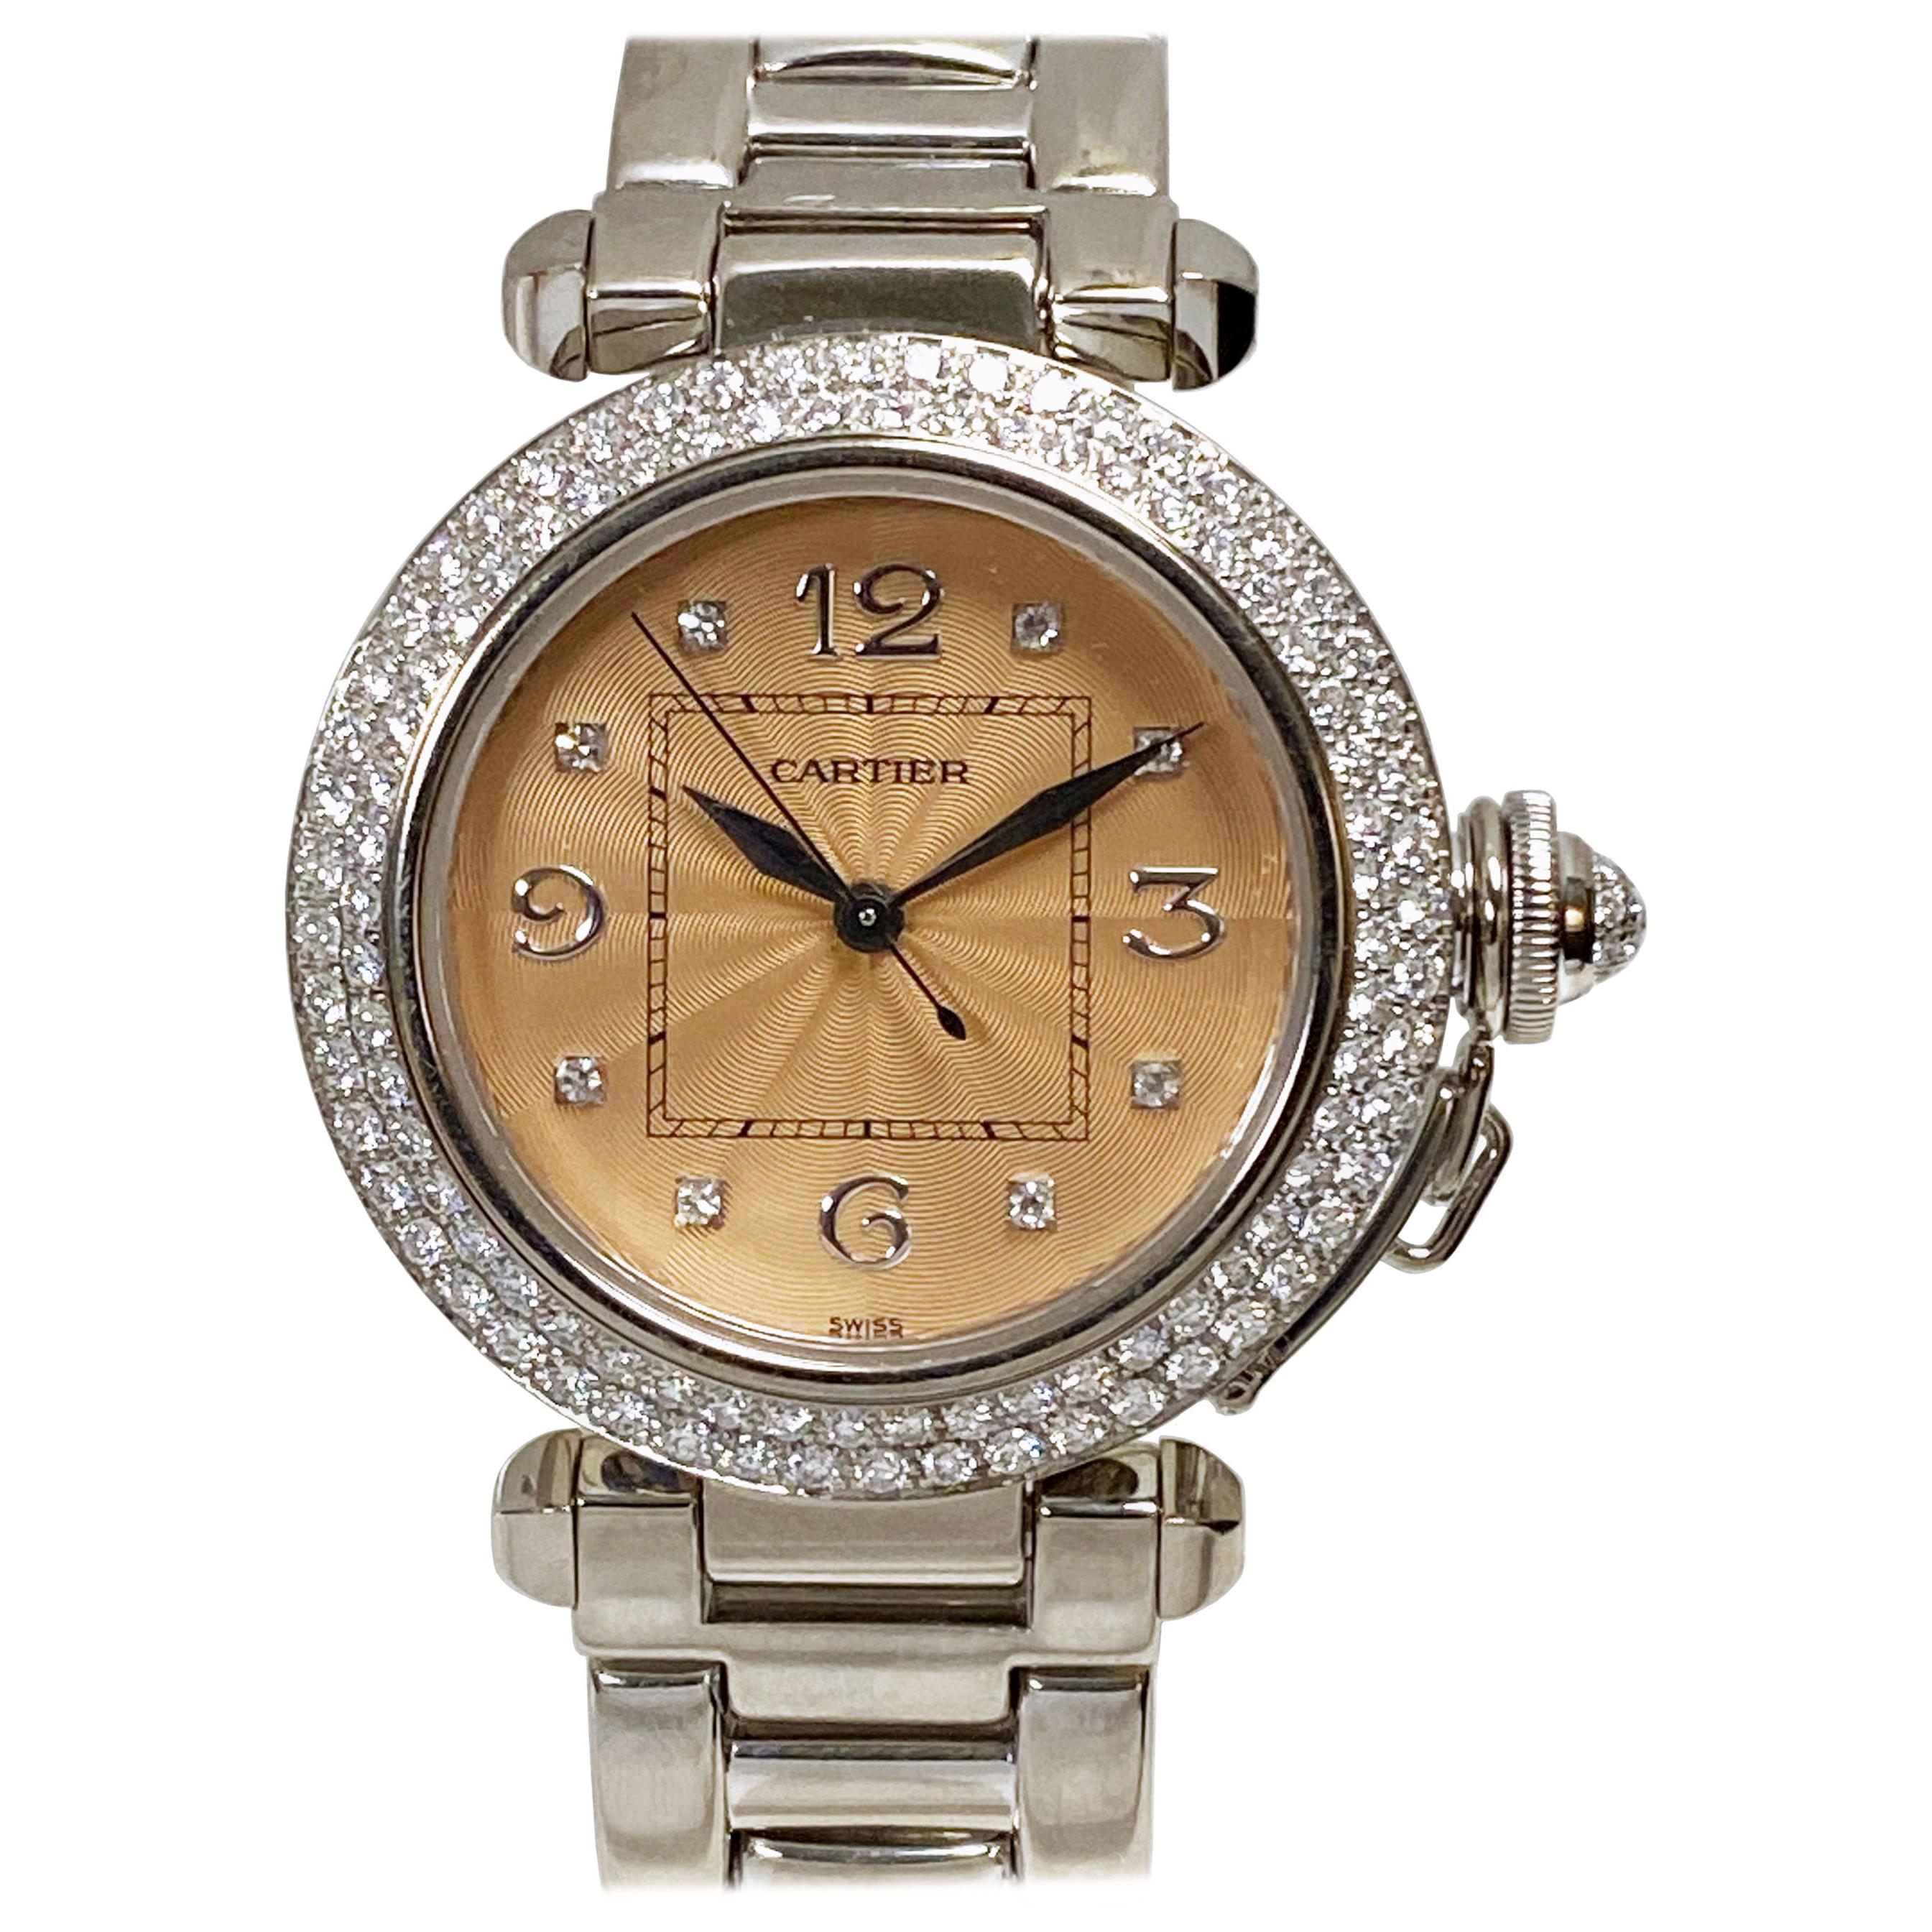 Cartier Pasha White Gold and Diamonds Automatic Wristwatch